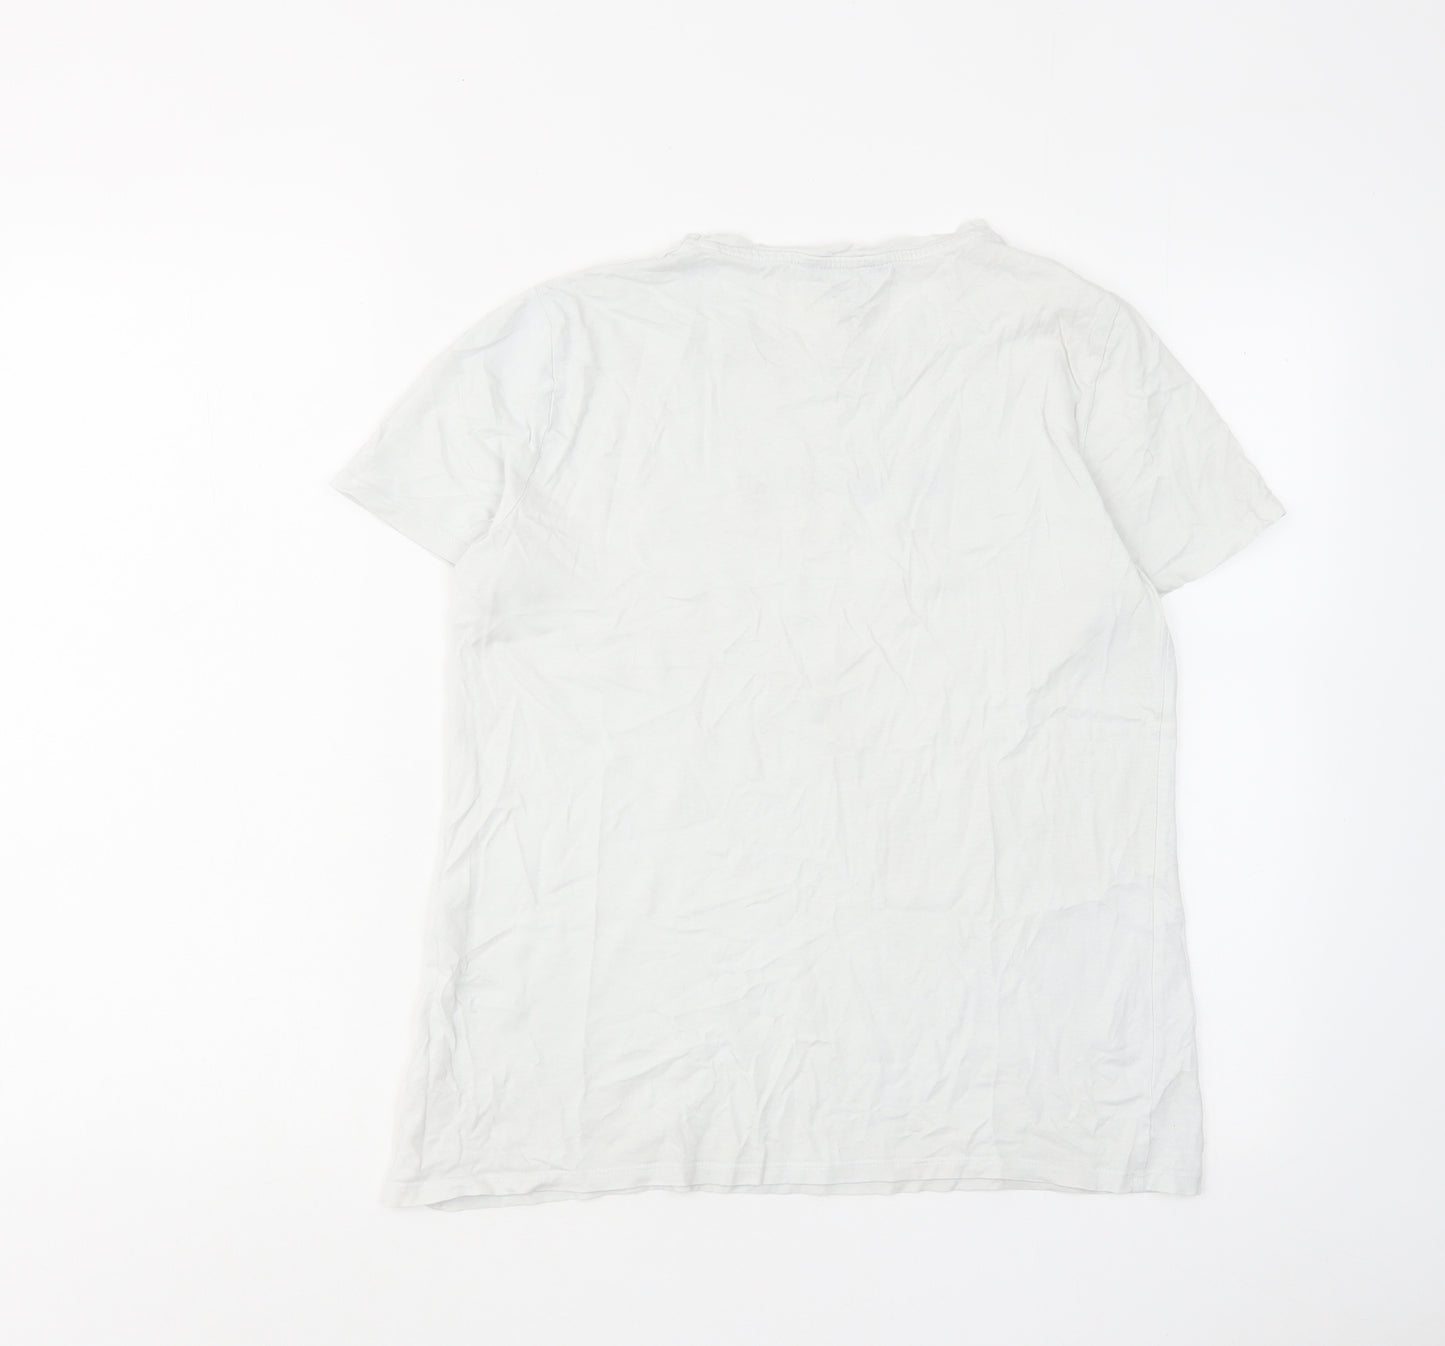 New Look Womens White Cotton Basic T-Shirt Size 10 Round Neck